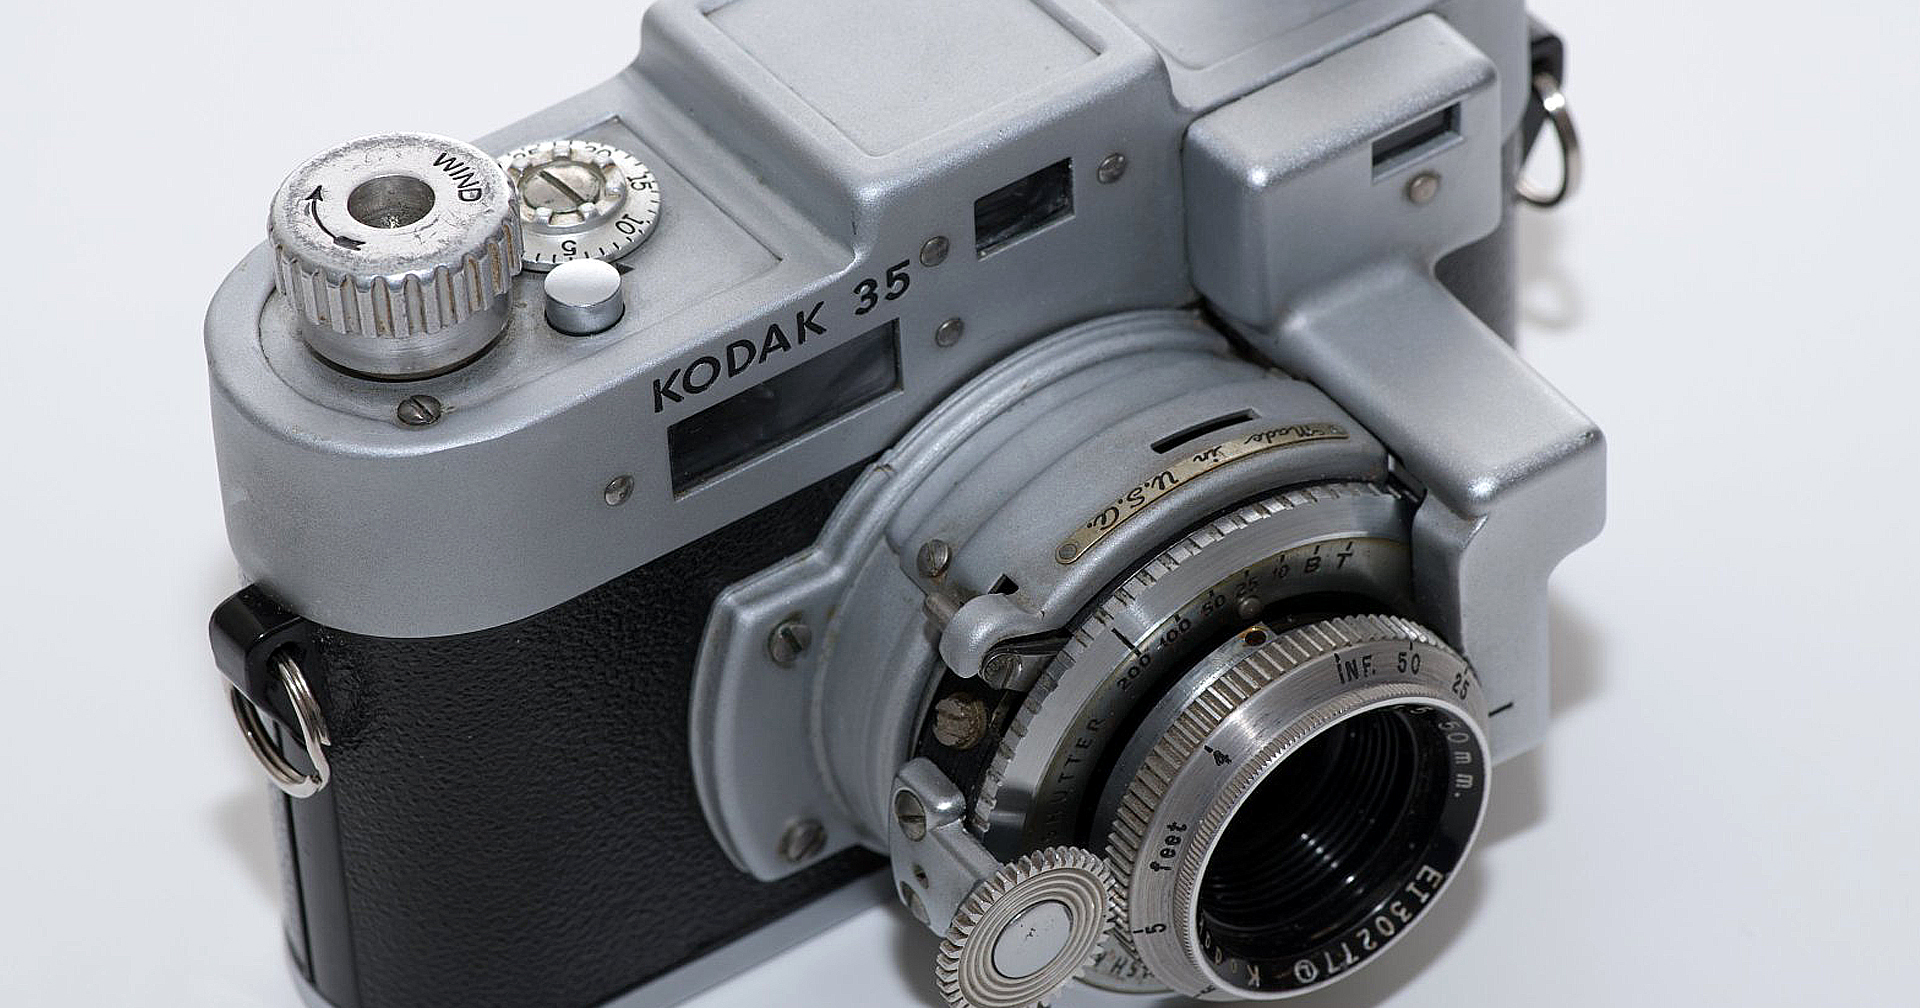 OPPO จับมือ Kodak พัฒนาสมาร์ตโฟนดีไซน์กล้องคลาสสิก พร้อมกล้อง 50 ล้านพิกเซล 2 ตัว